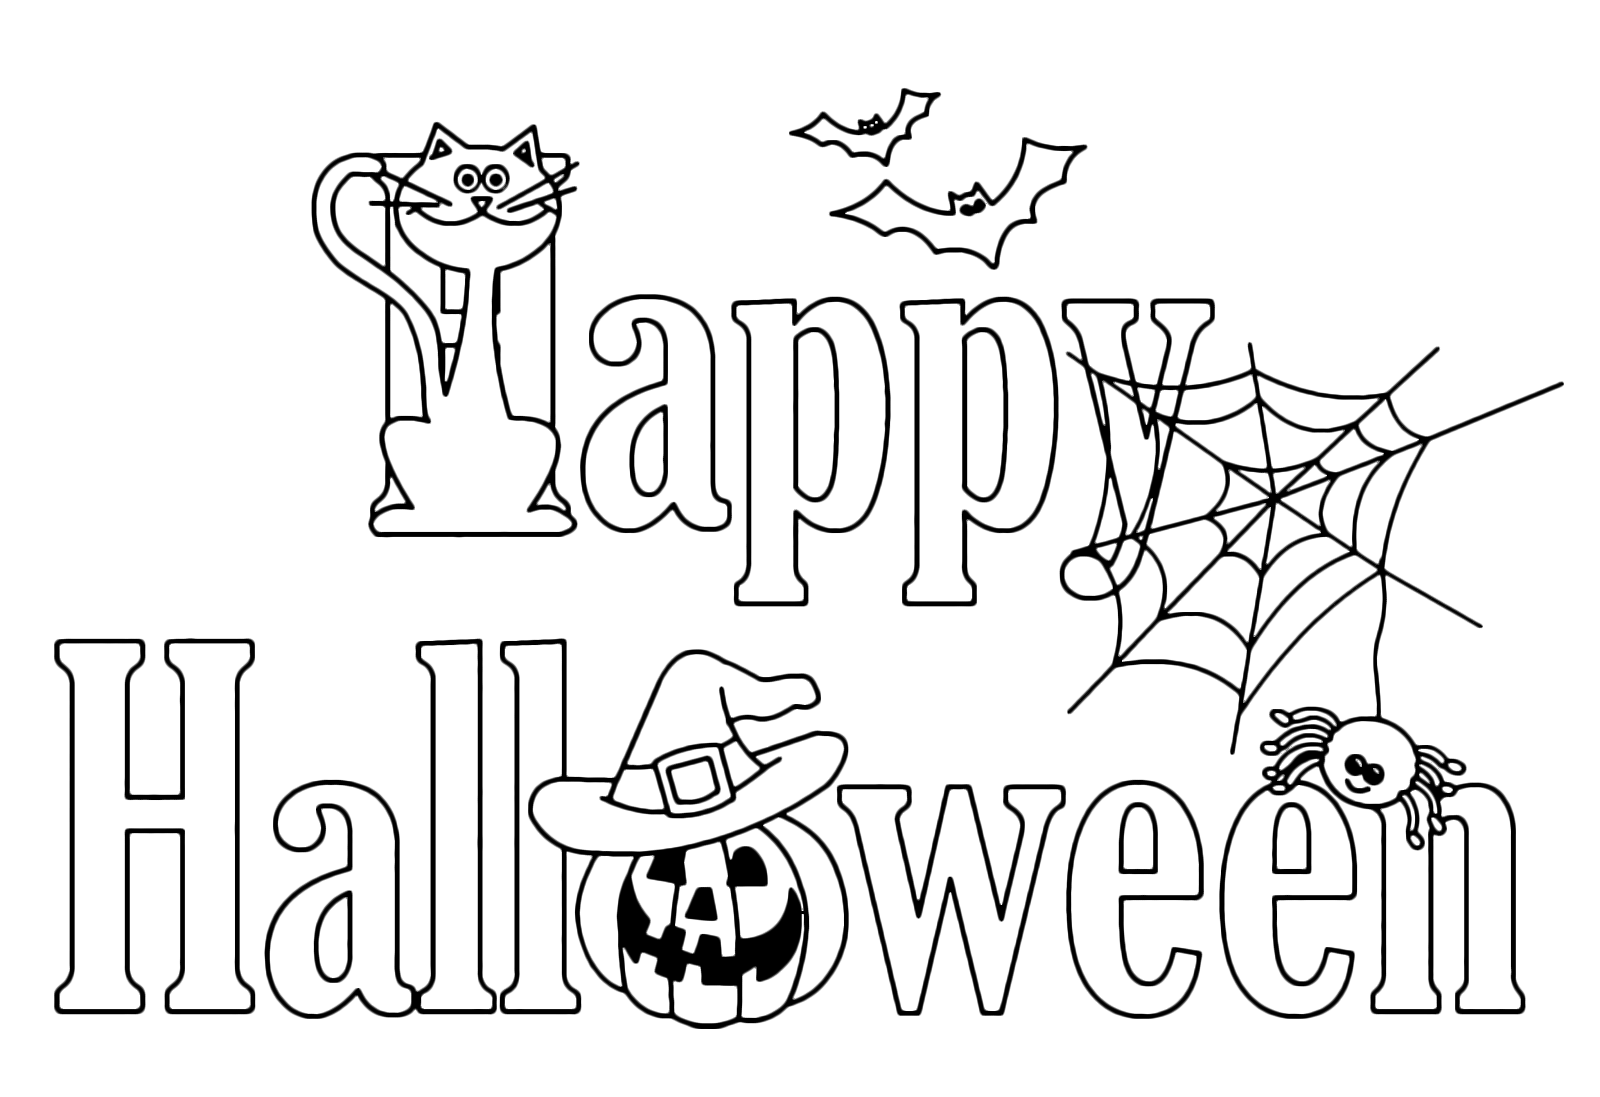 Halloween - Halloween banner with pumpkin cat and spider webs